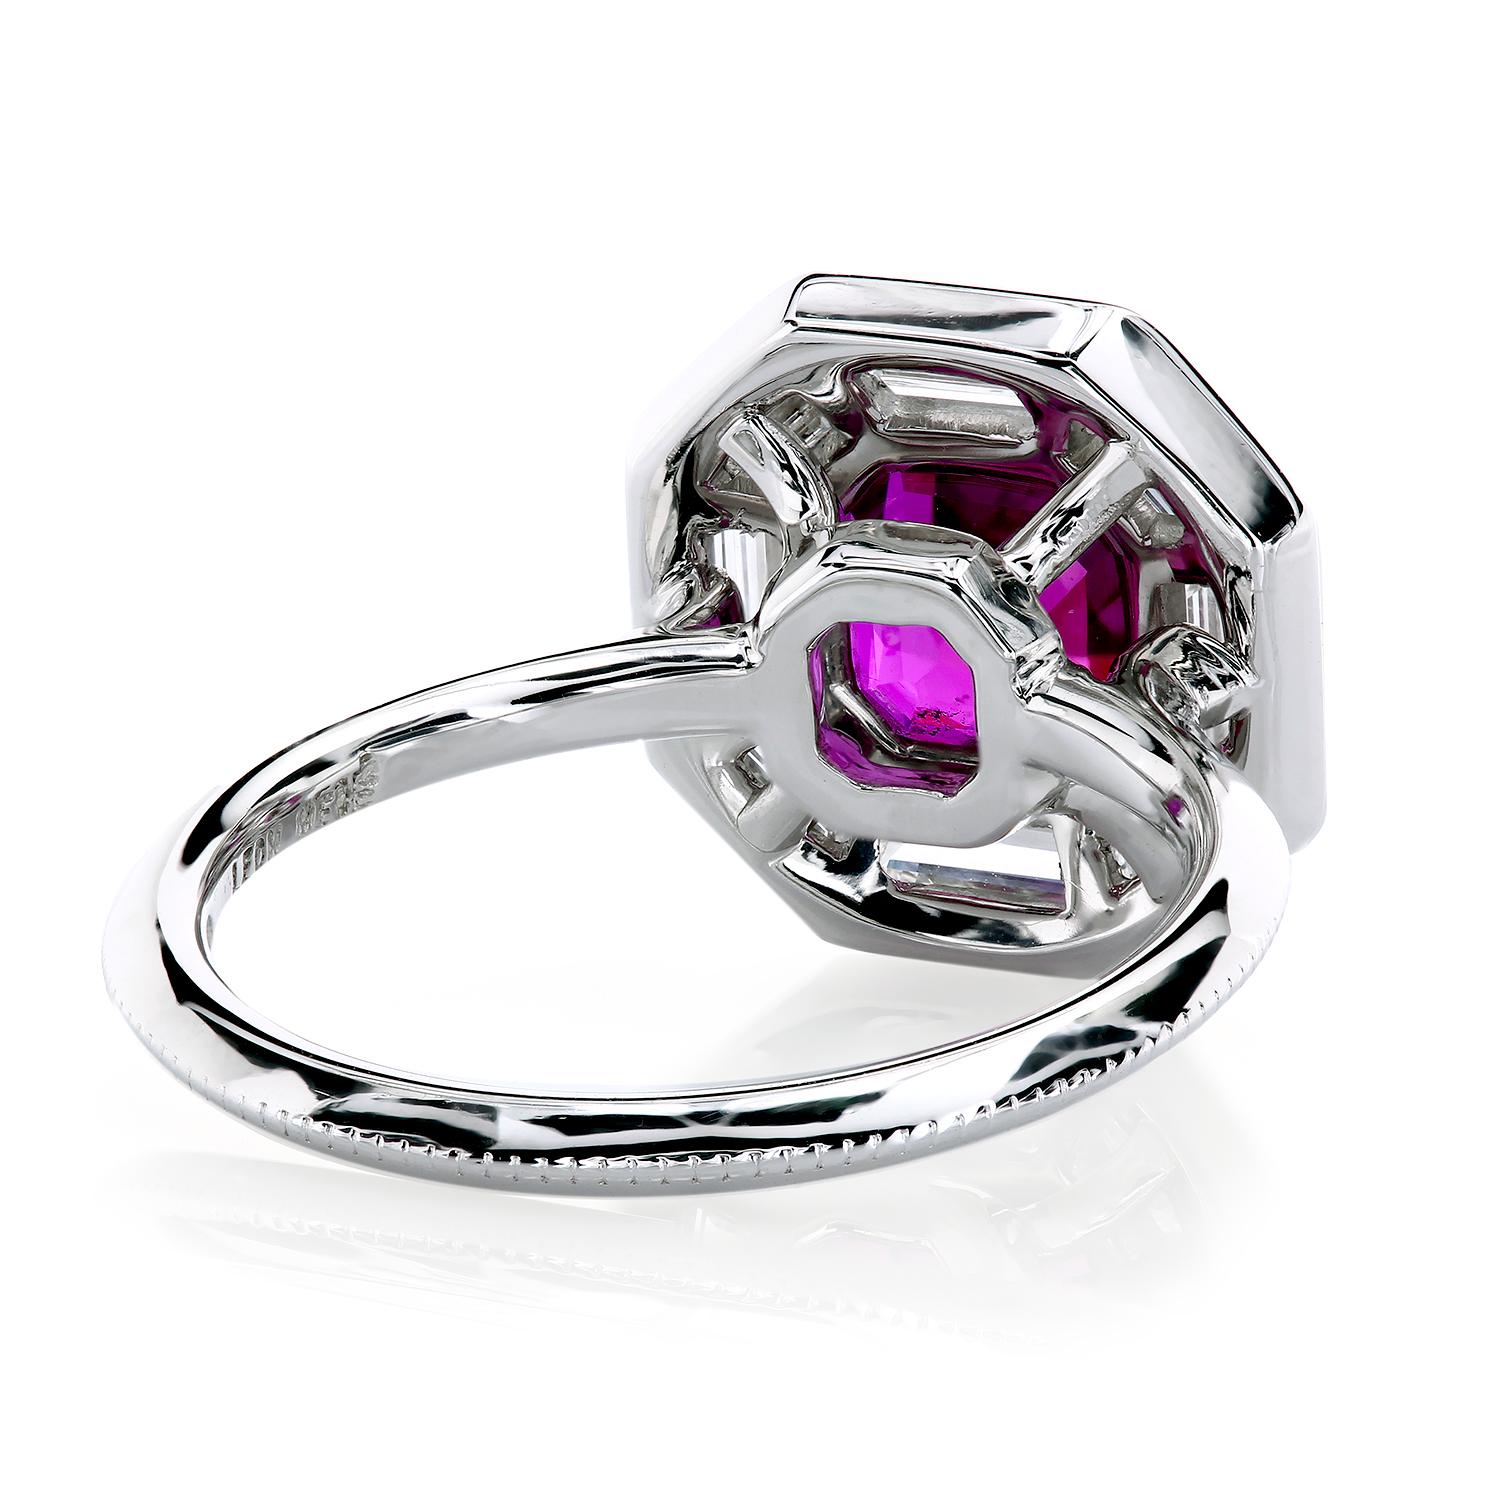 Asscher Cut Leon Mege platinum ring with natural hot-pink sapphire and diamond daguettes For Sale